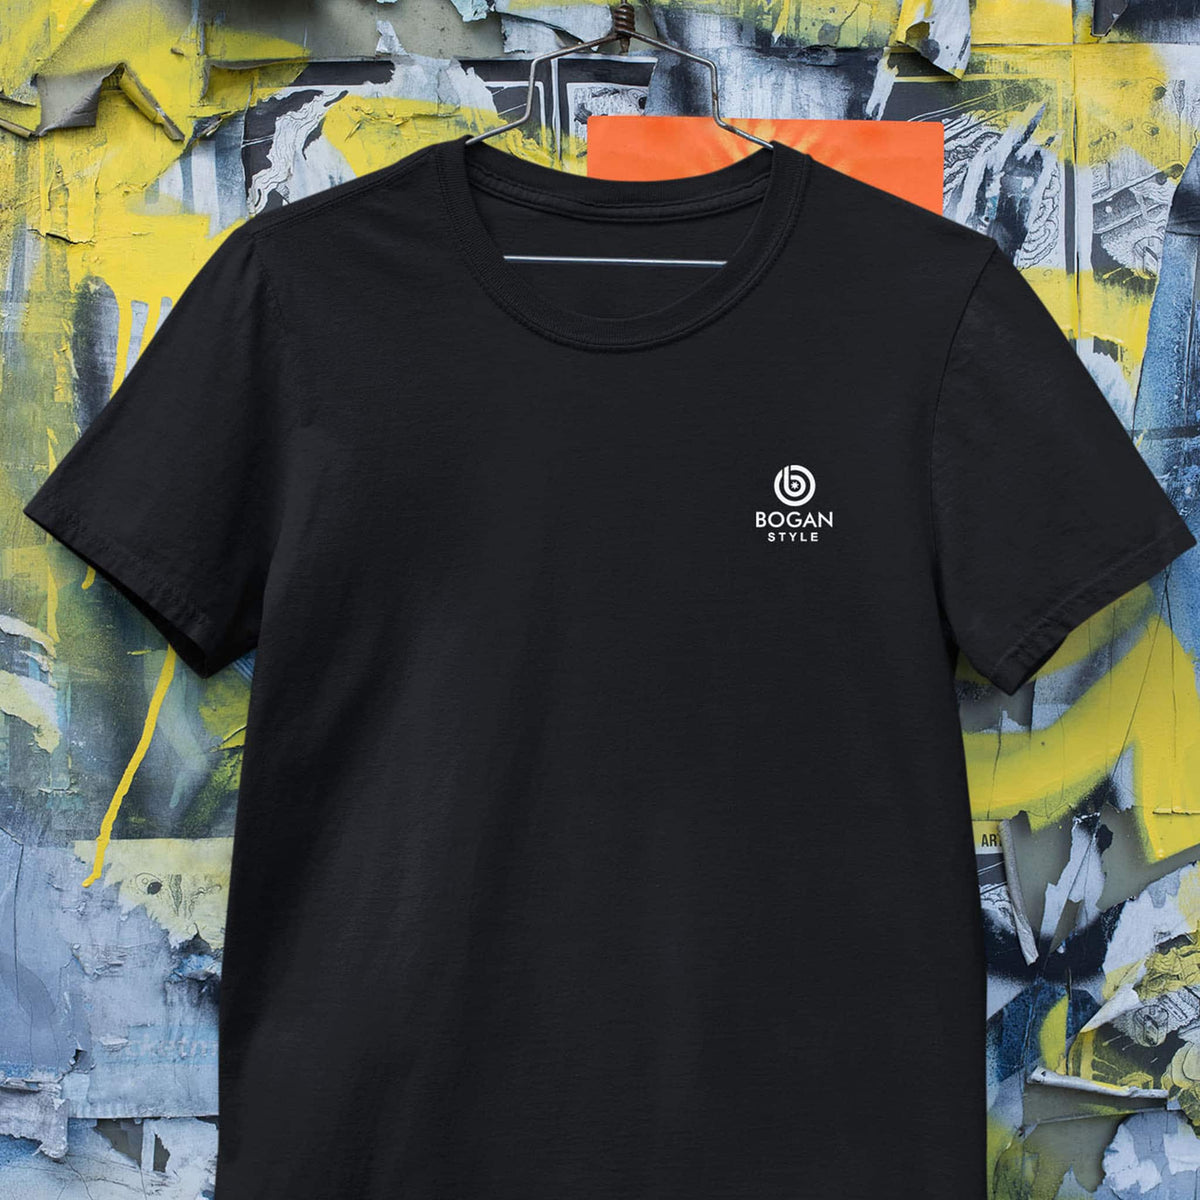 Men's black t shirt on graffiti background wth small white logo